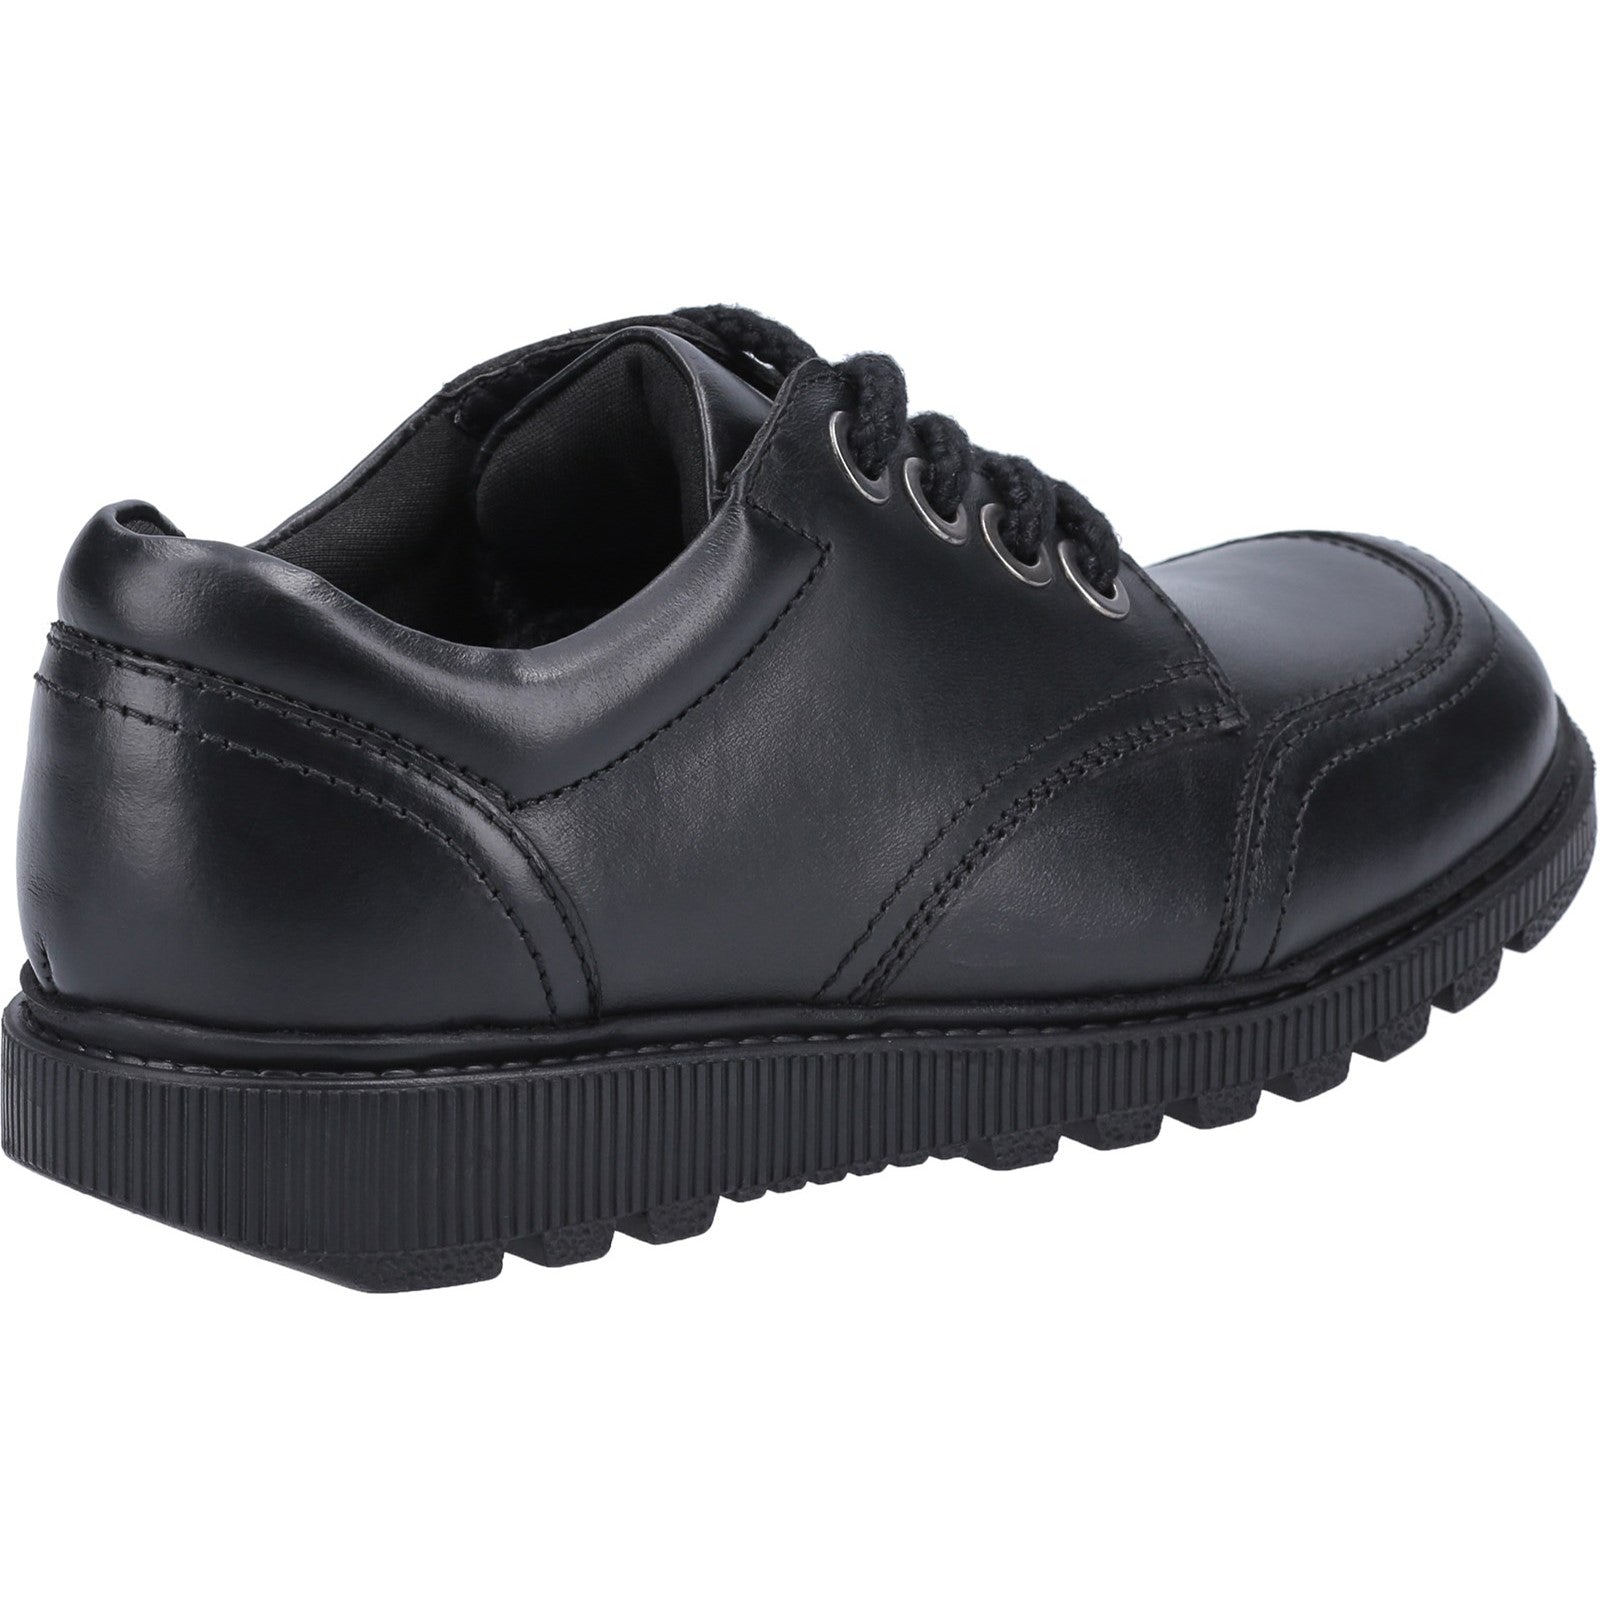 Hush Puppies Girls Kiera Leather School Shoes - Black